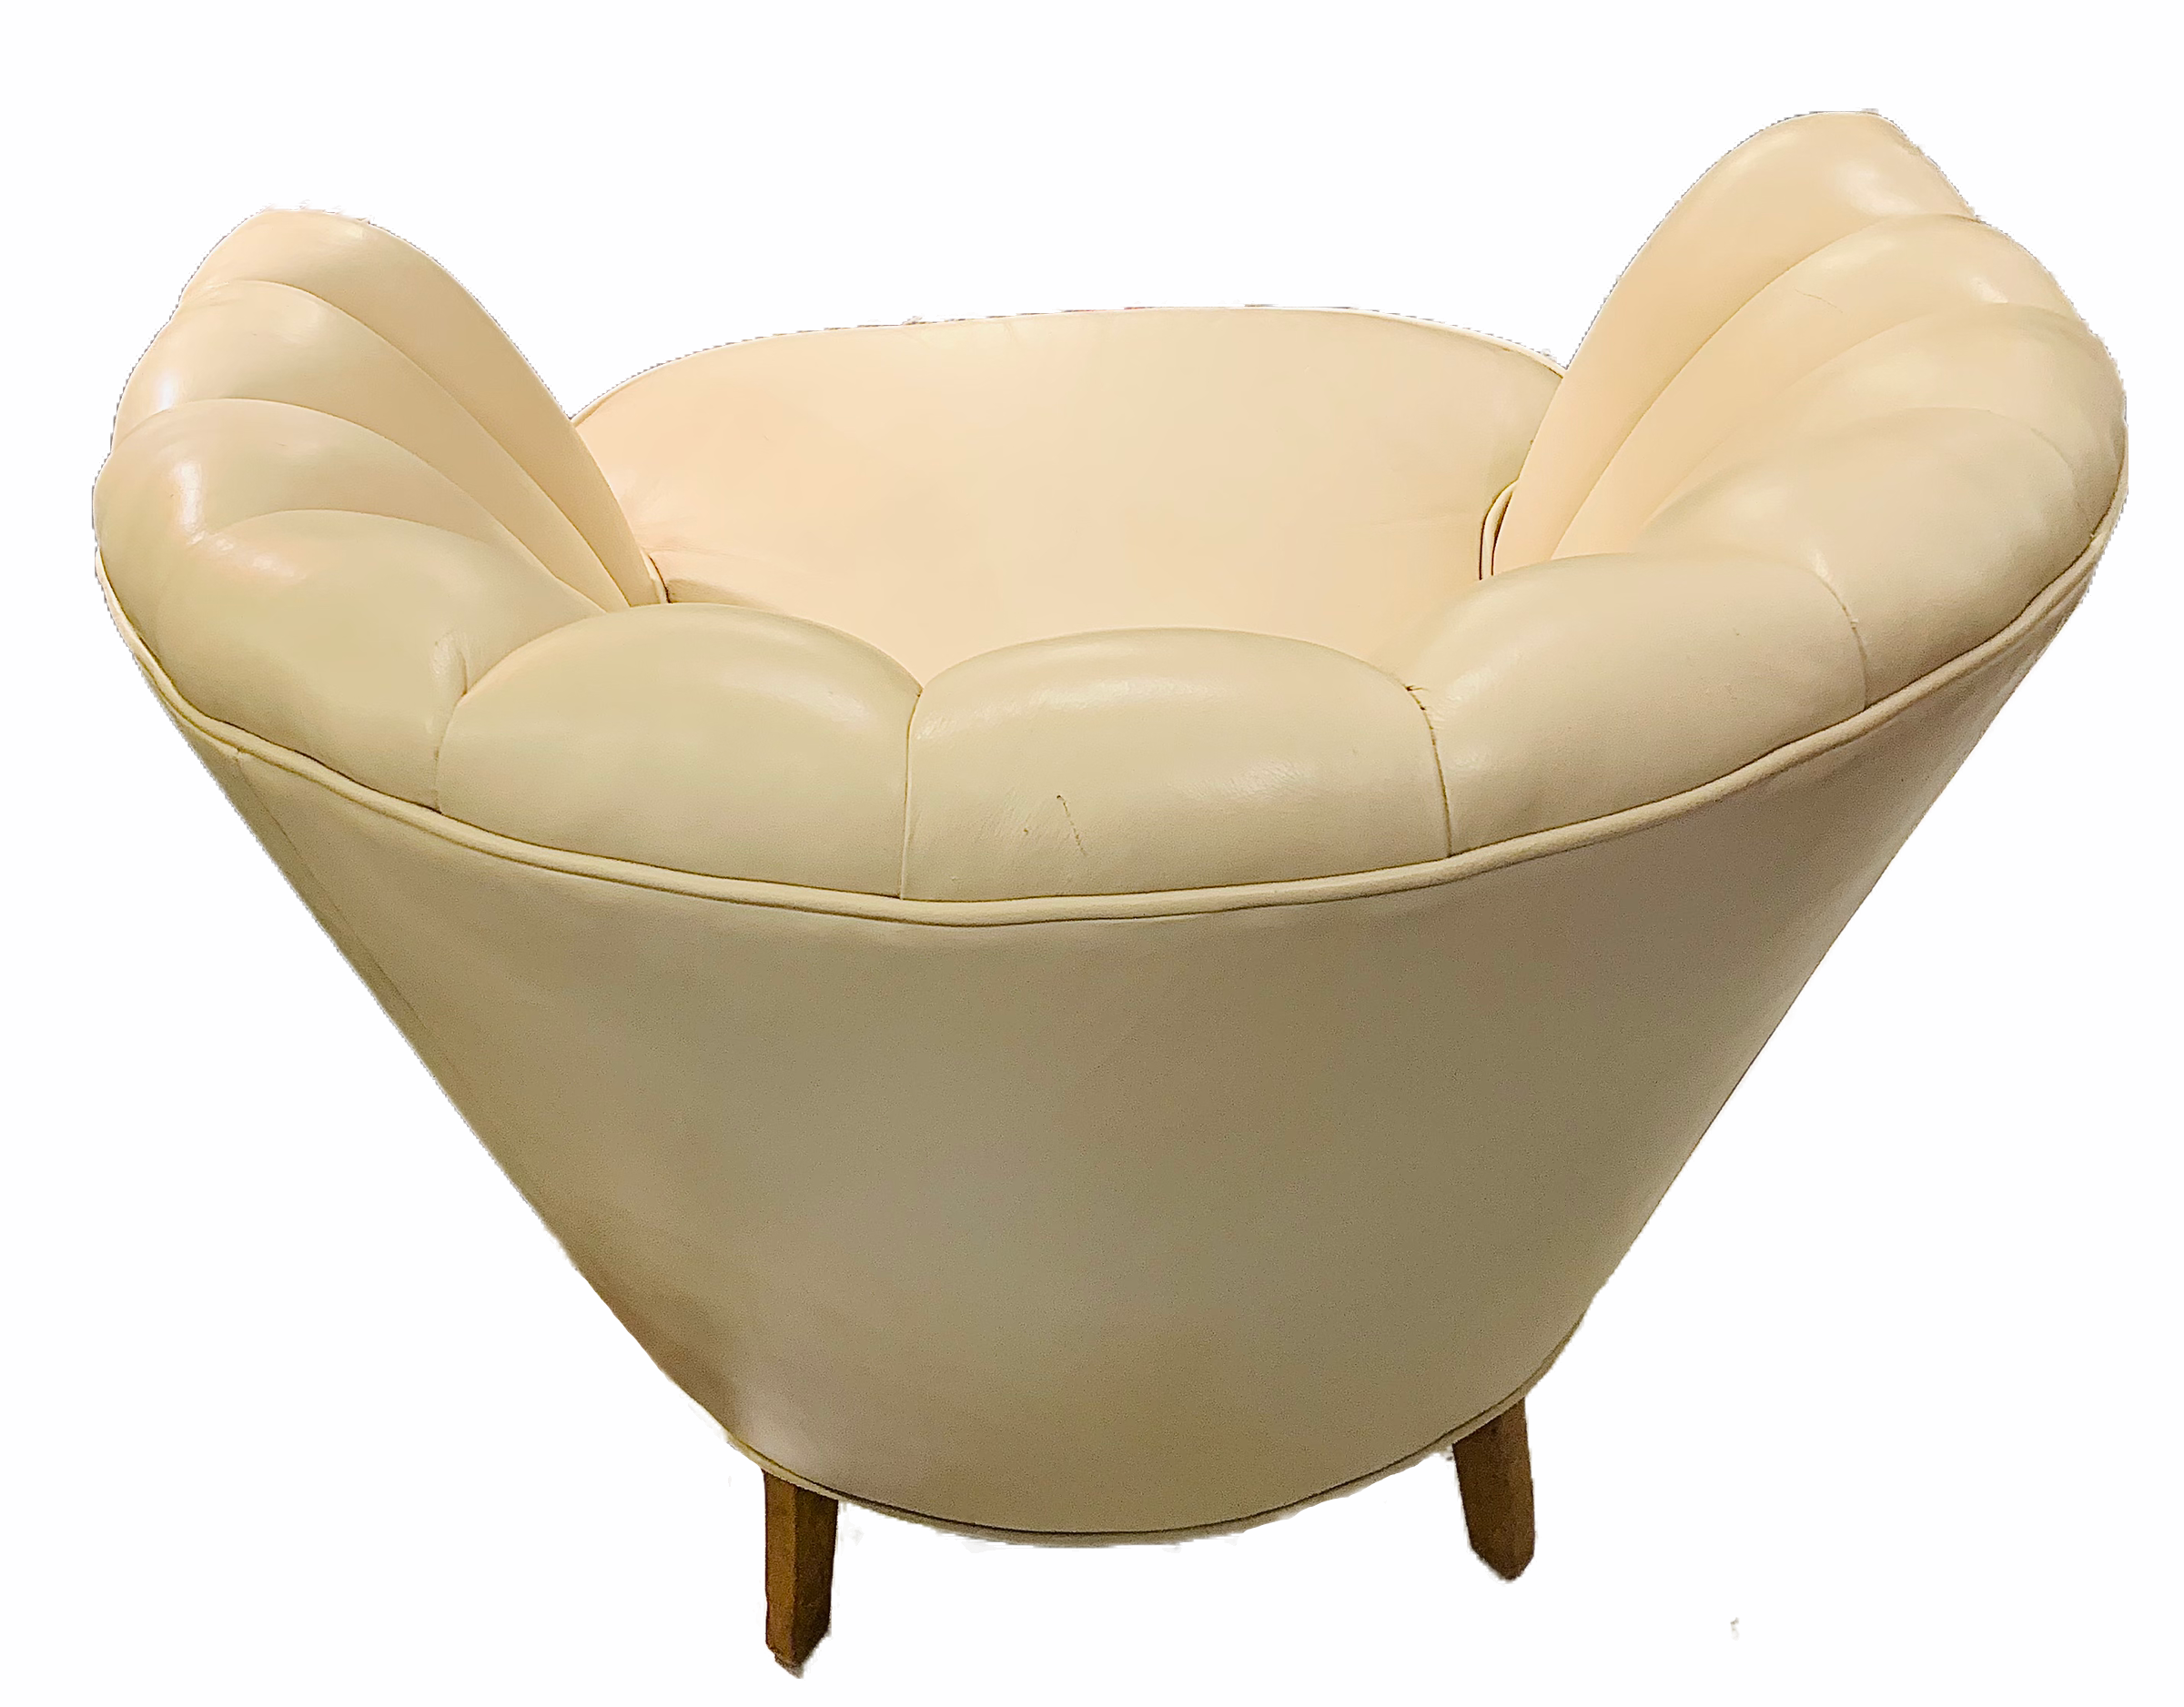 “Jamar Tongue” Cream Chairs (Pair)